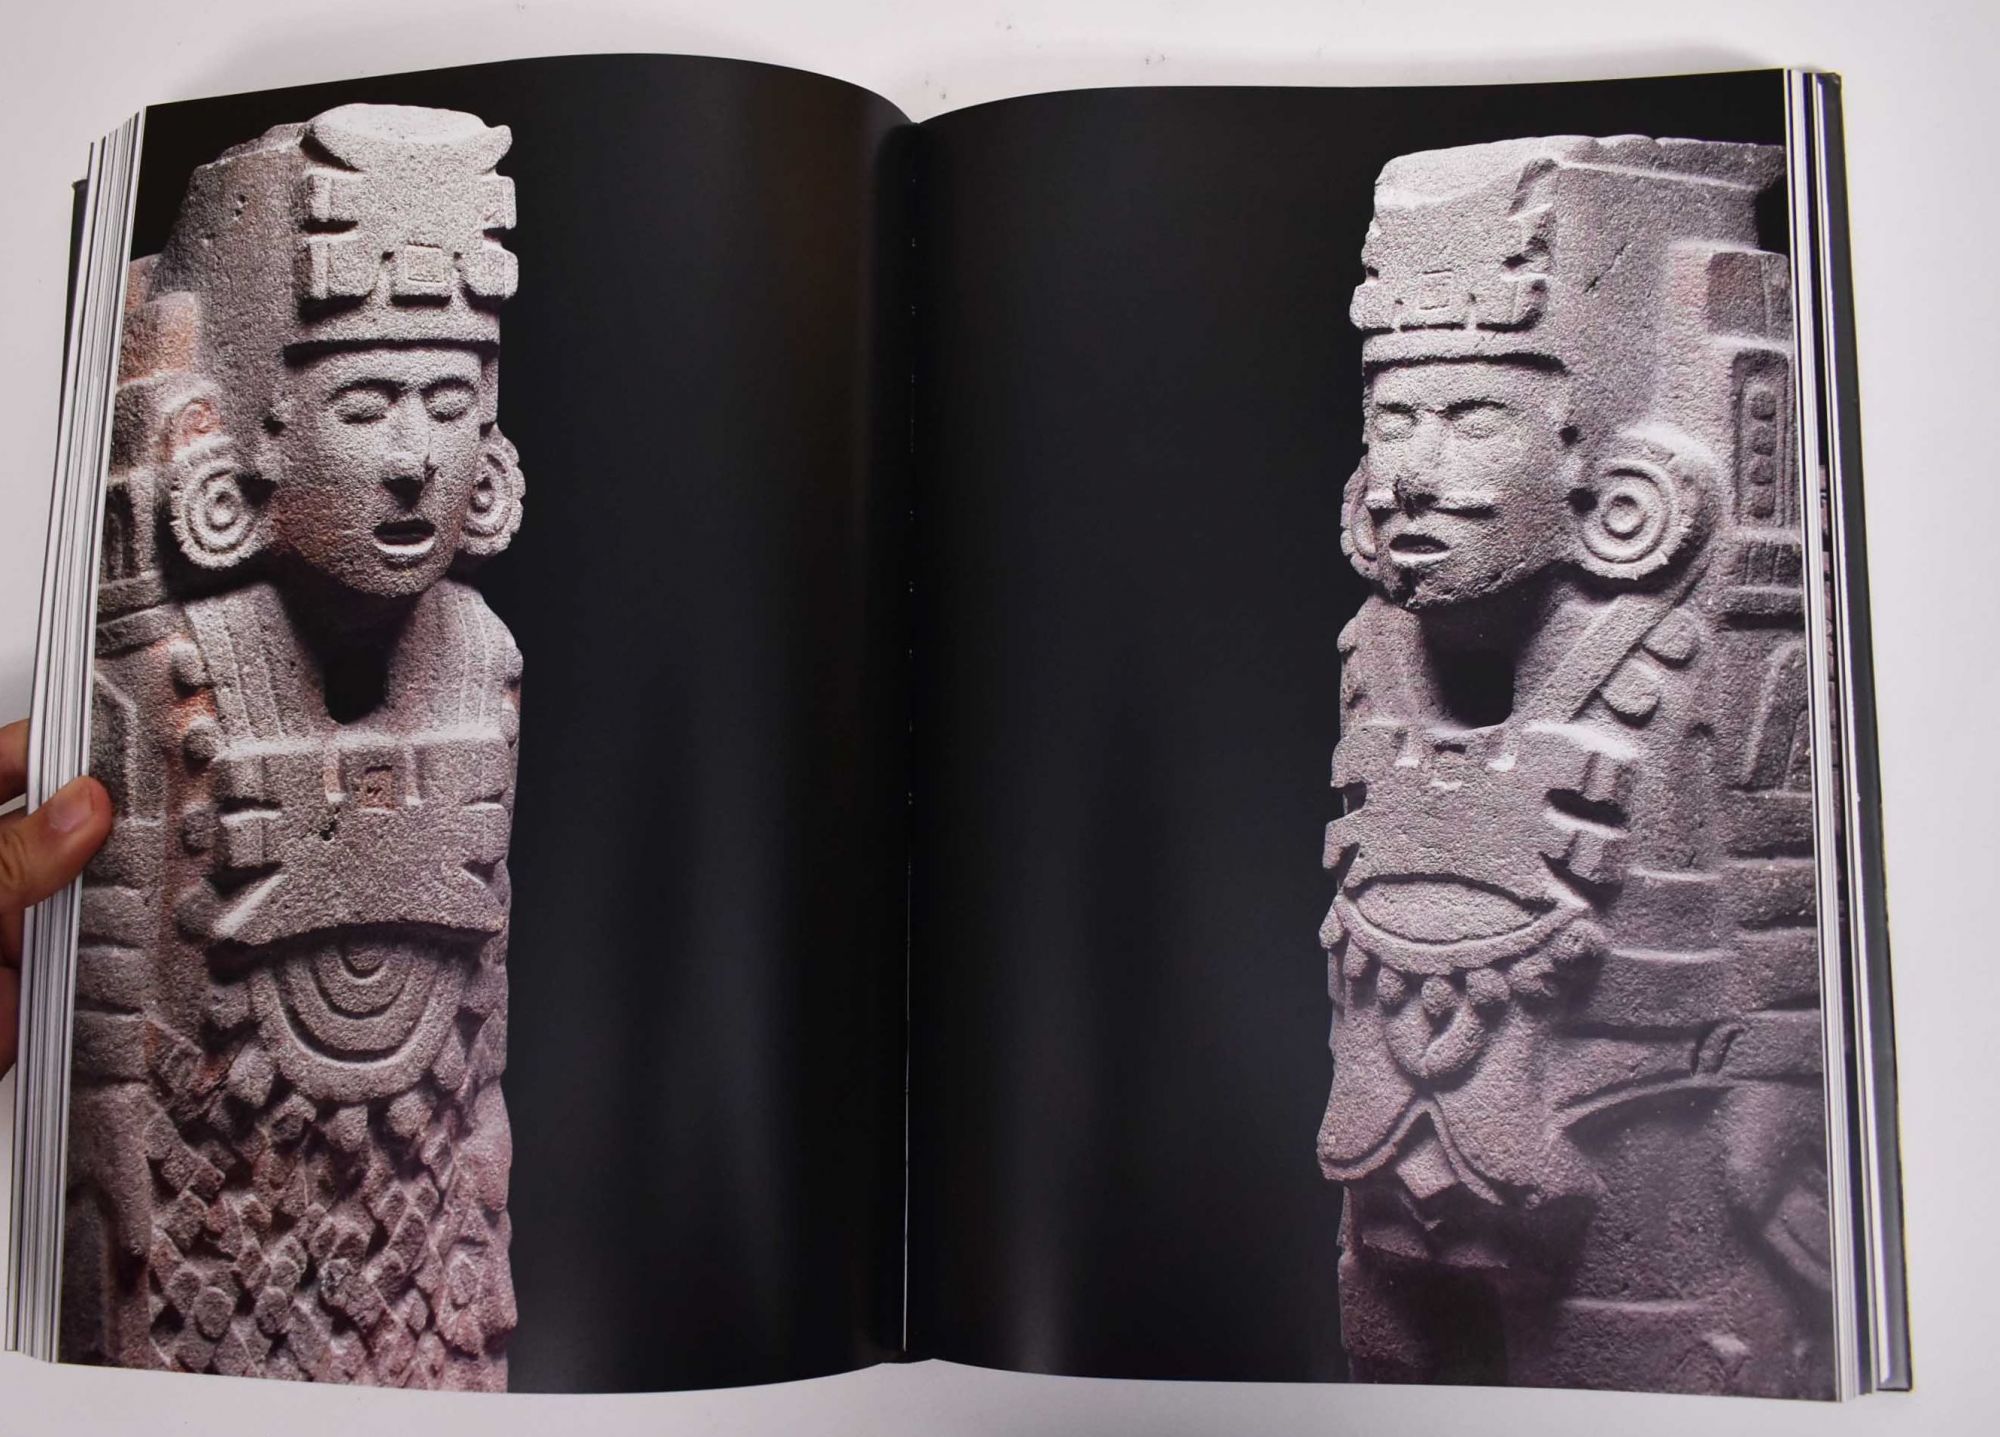 El Imperio Azteca by Felipe R. Solís on Mullen Books